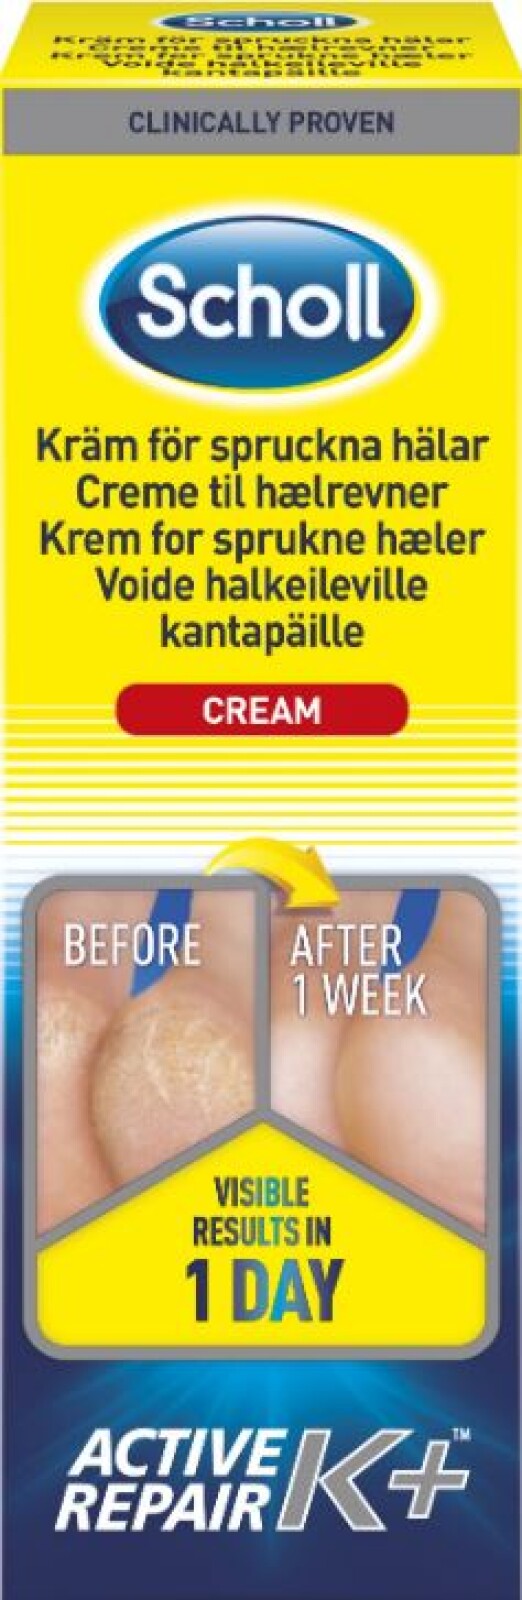 Scholl Aktive Repair K+ Cream